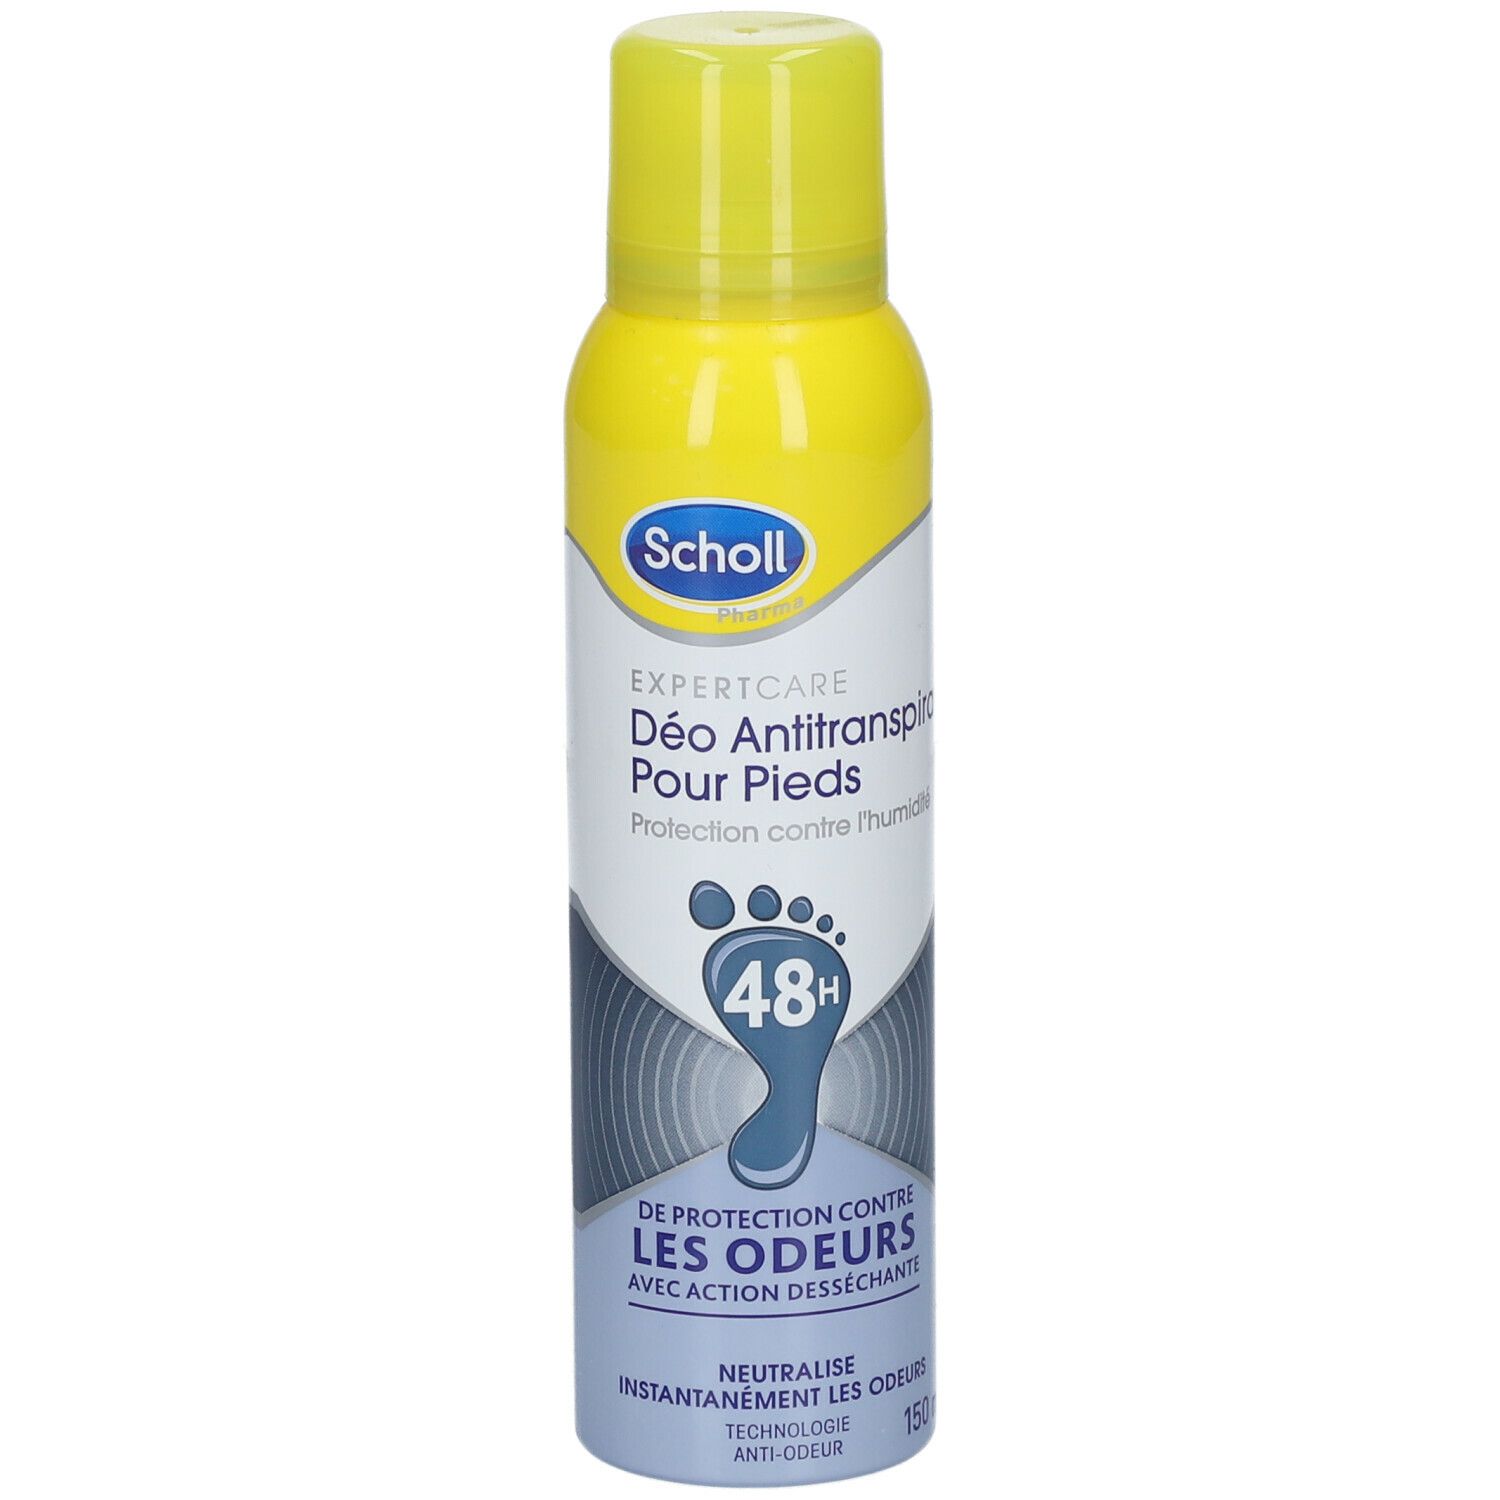 SCHOLL Déo anti transpirant pour pieds 48h anti-odeur spray 150ml